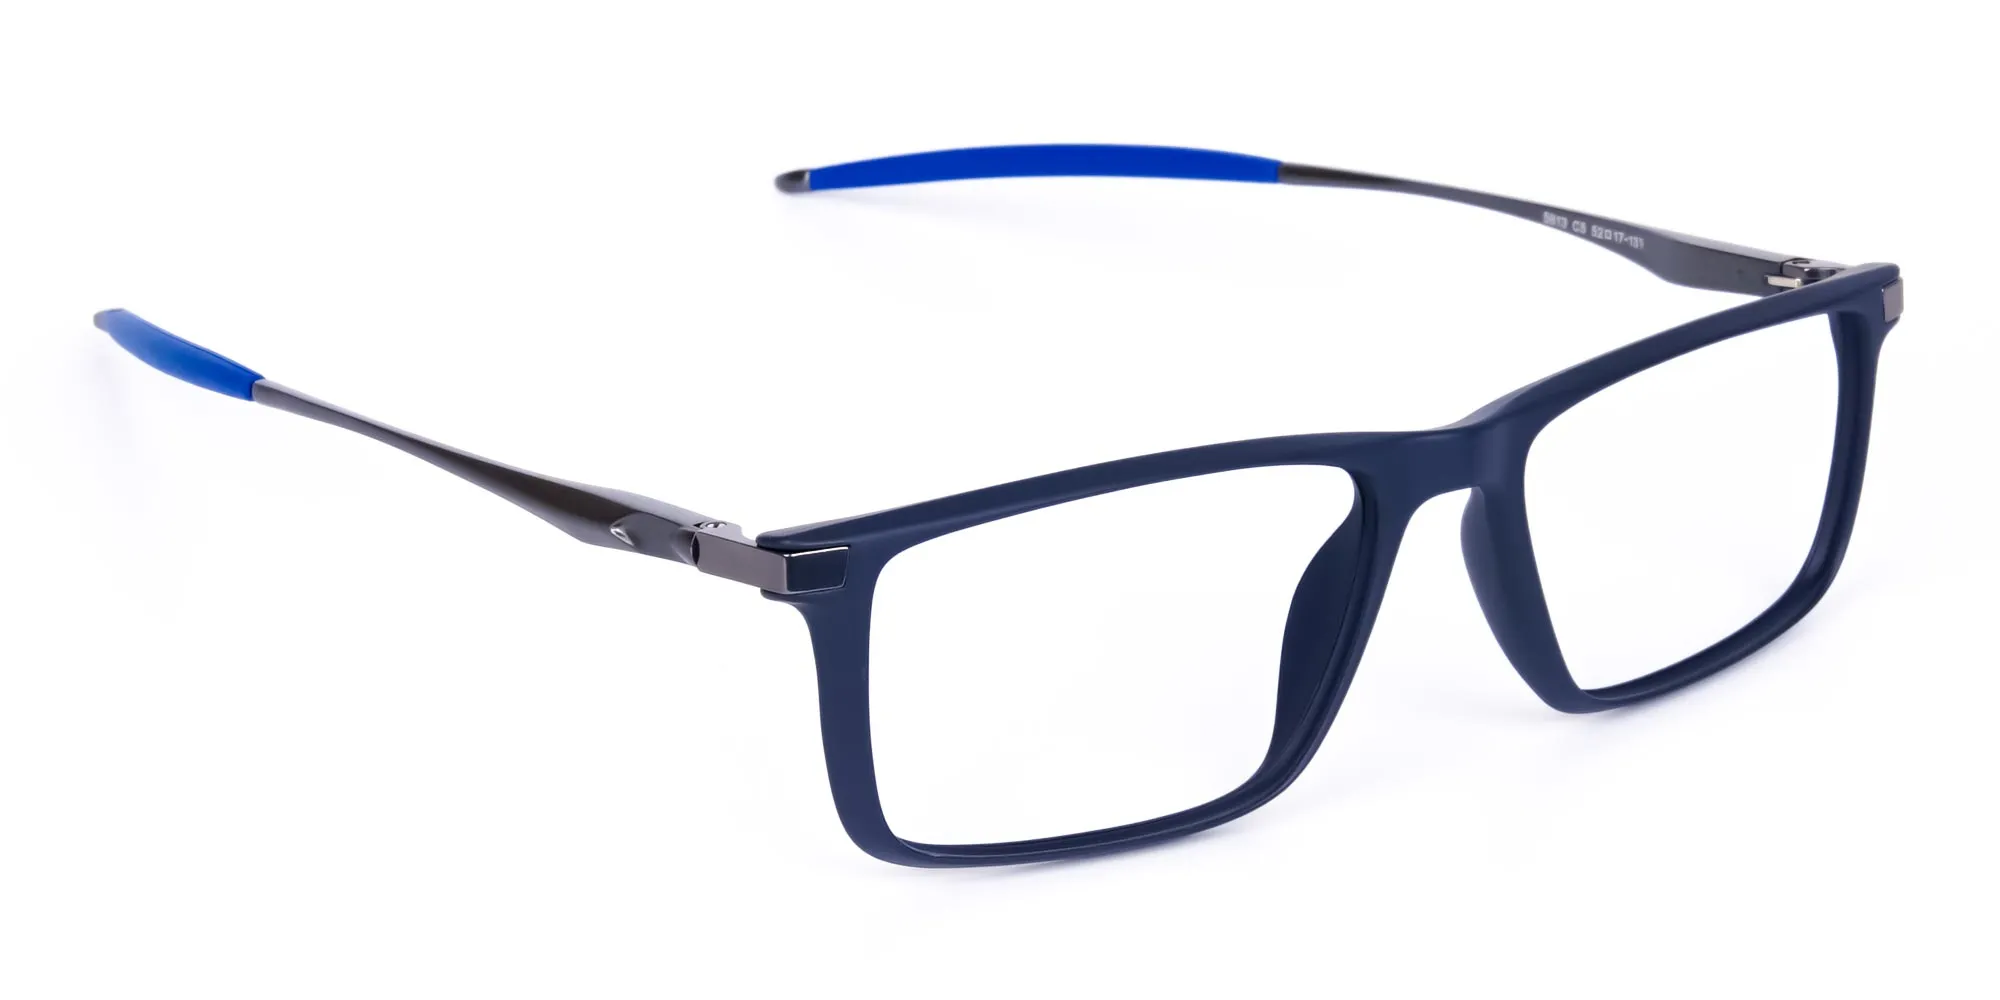 Blue and Black Prescription Football Glasses - 2